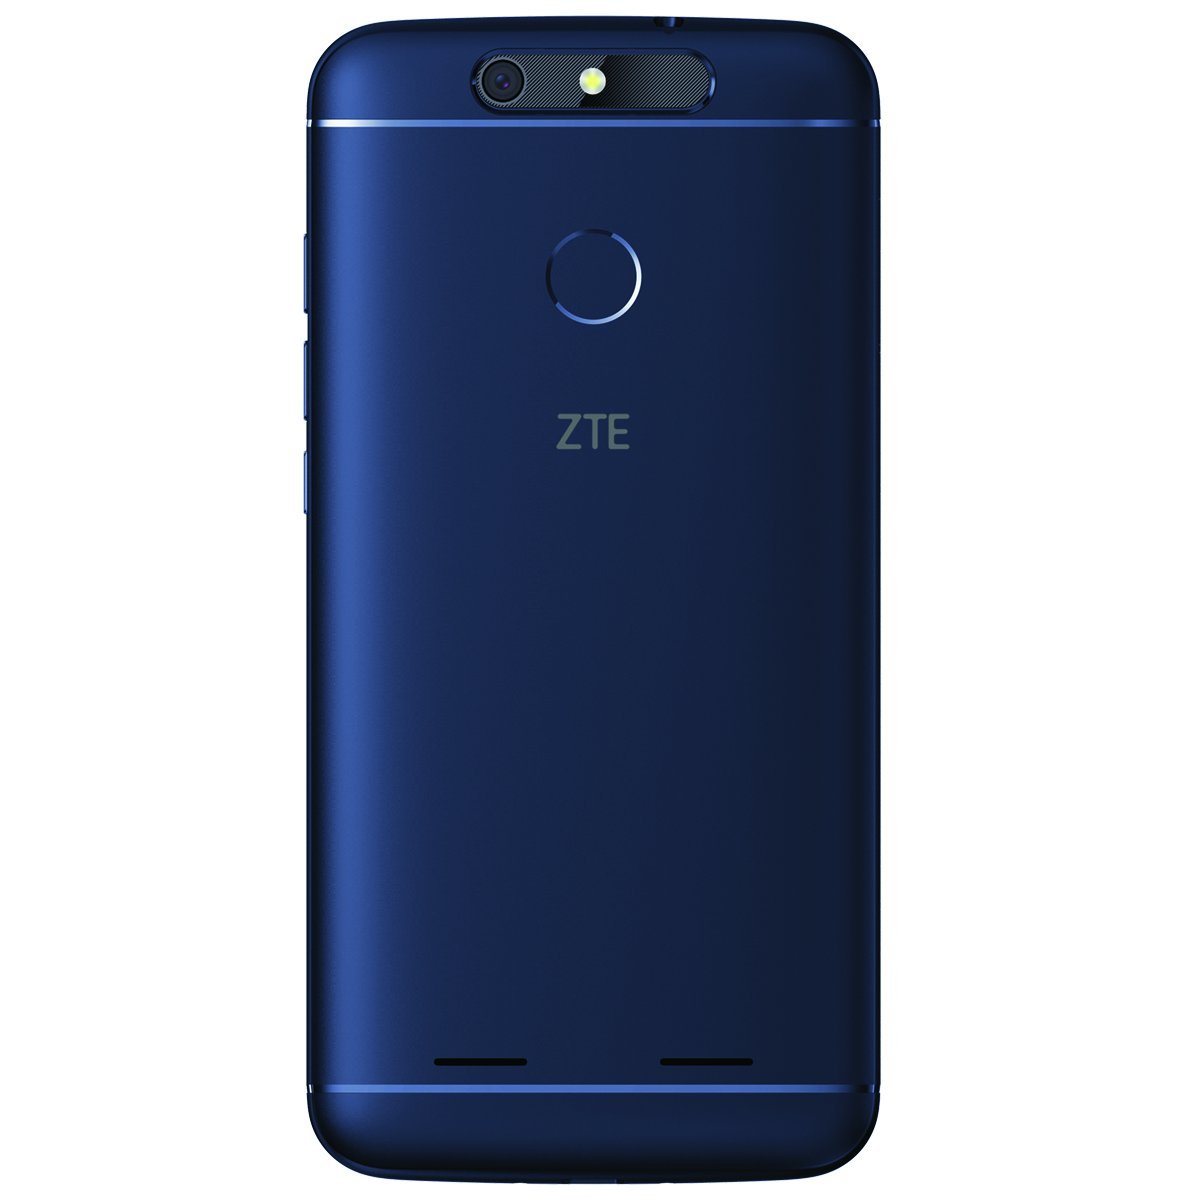 Celular Zte V8 Se Azul R9 (Telcel)